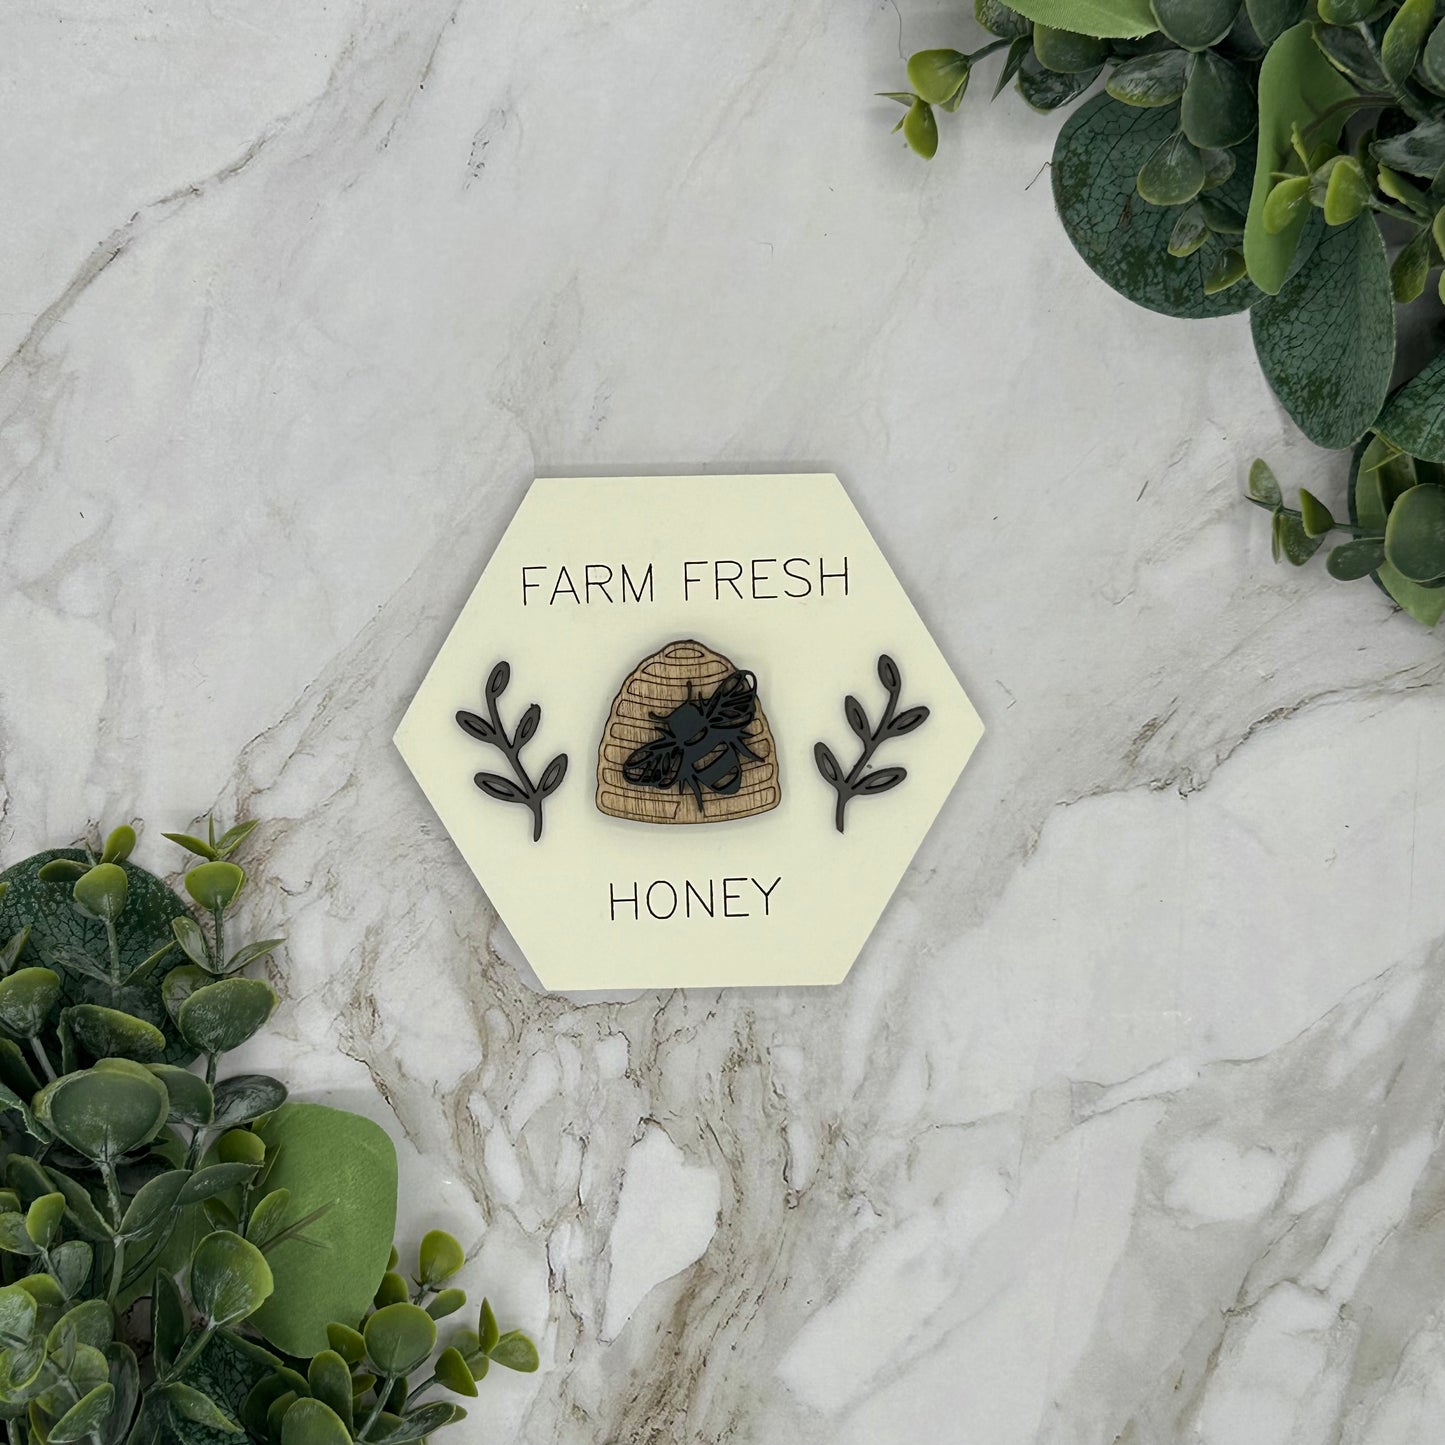 Farm Fresh Hexagon Sign